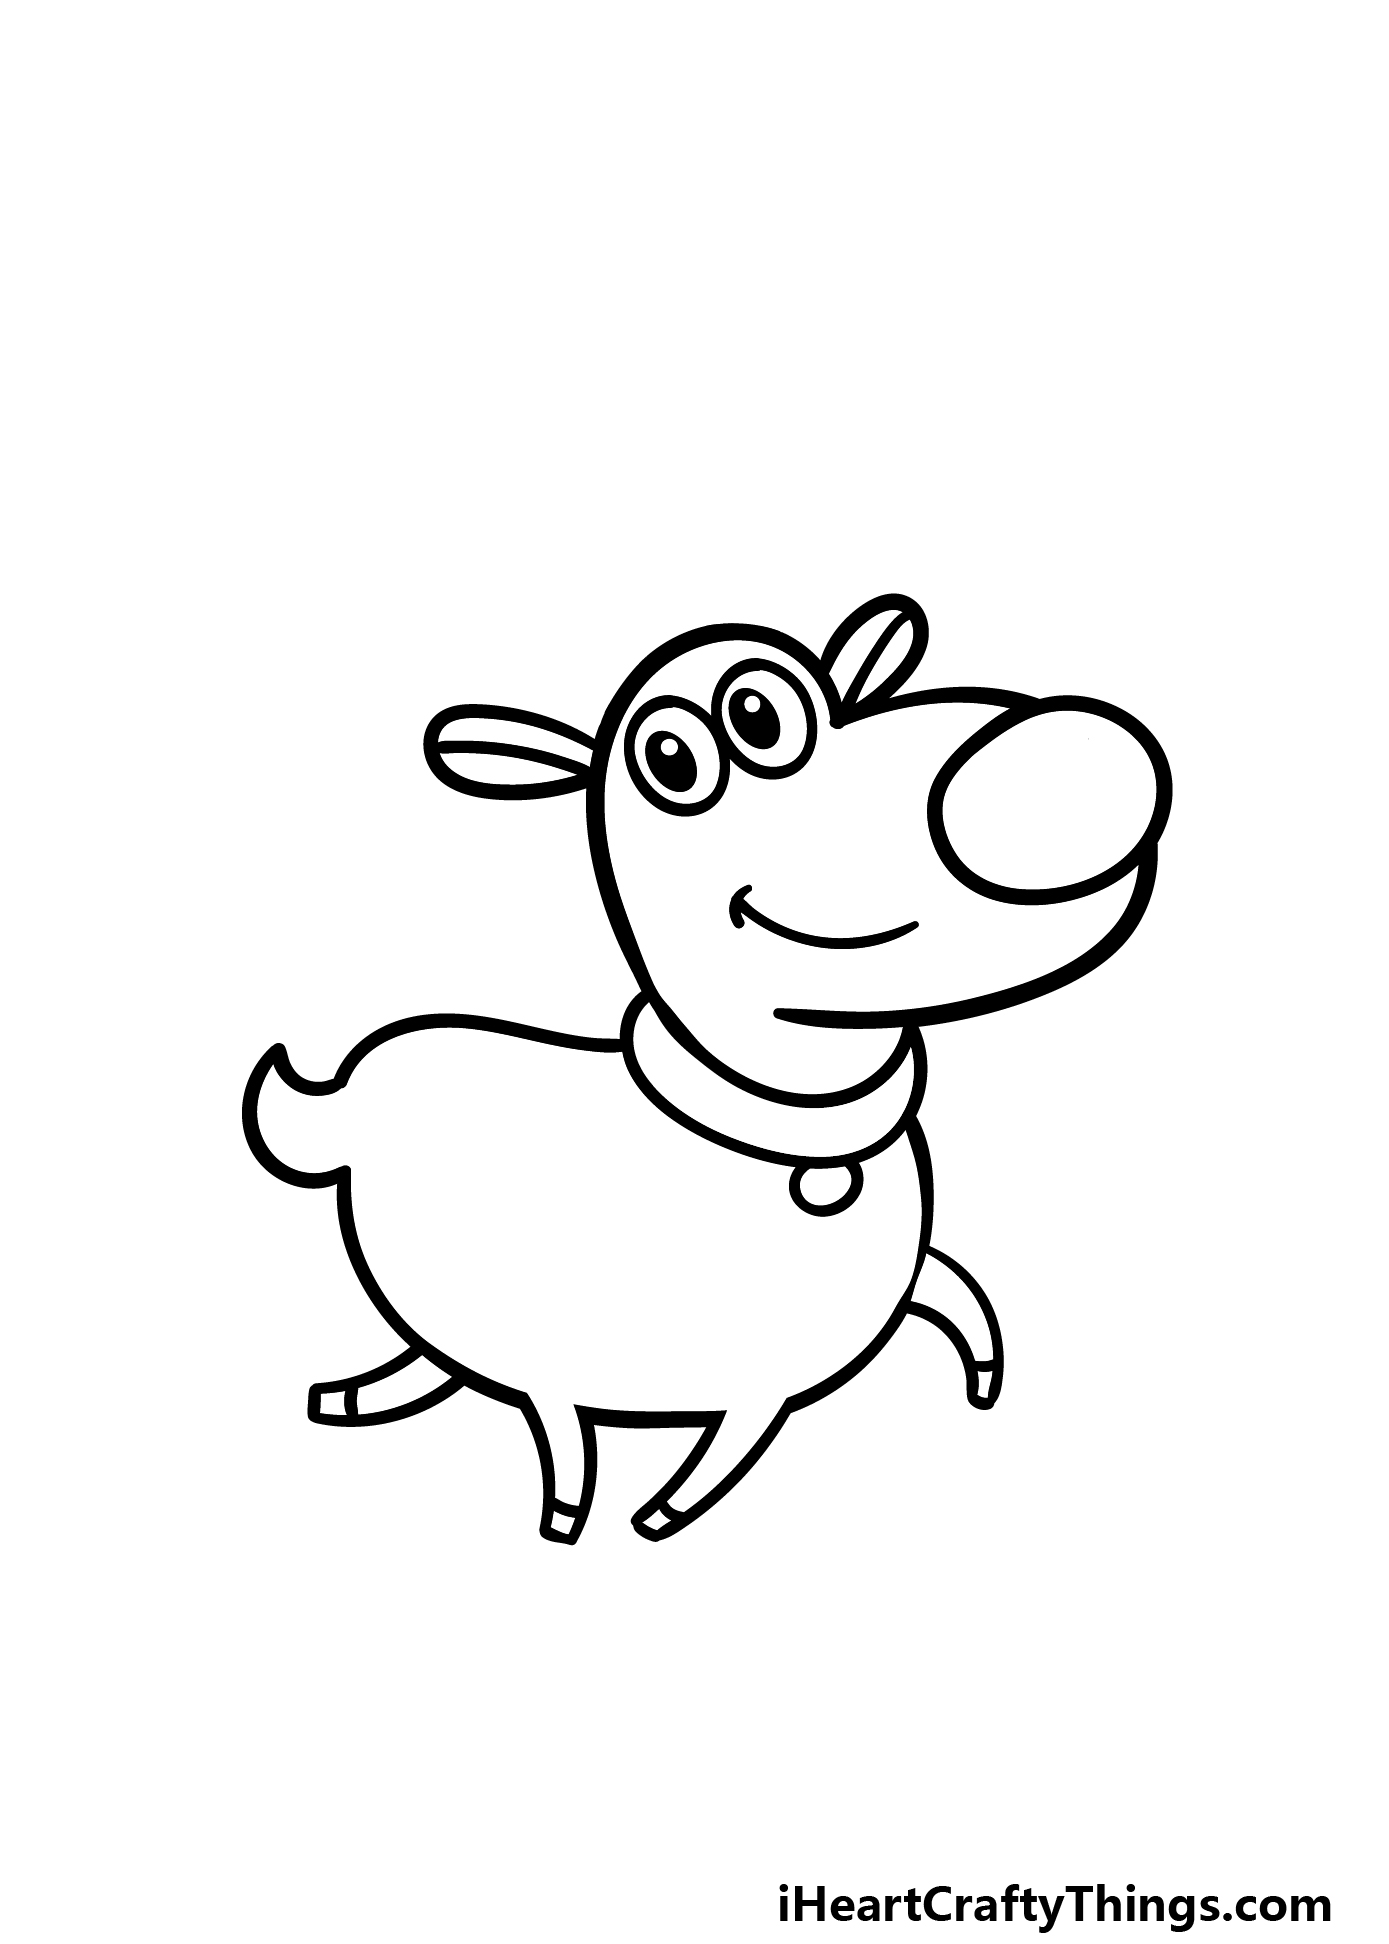 how to draw a cartoon reindeer step 4